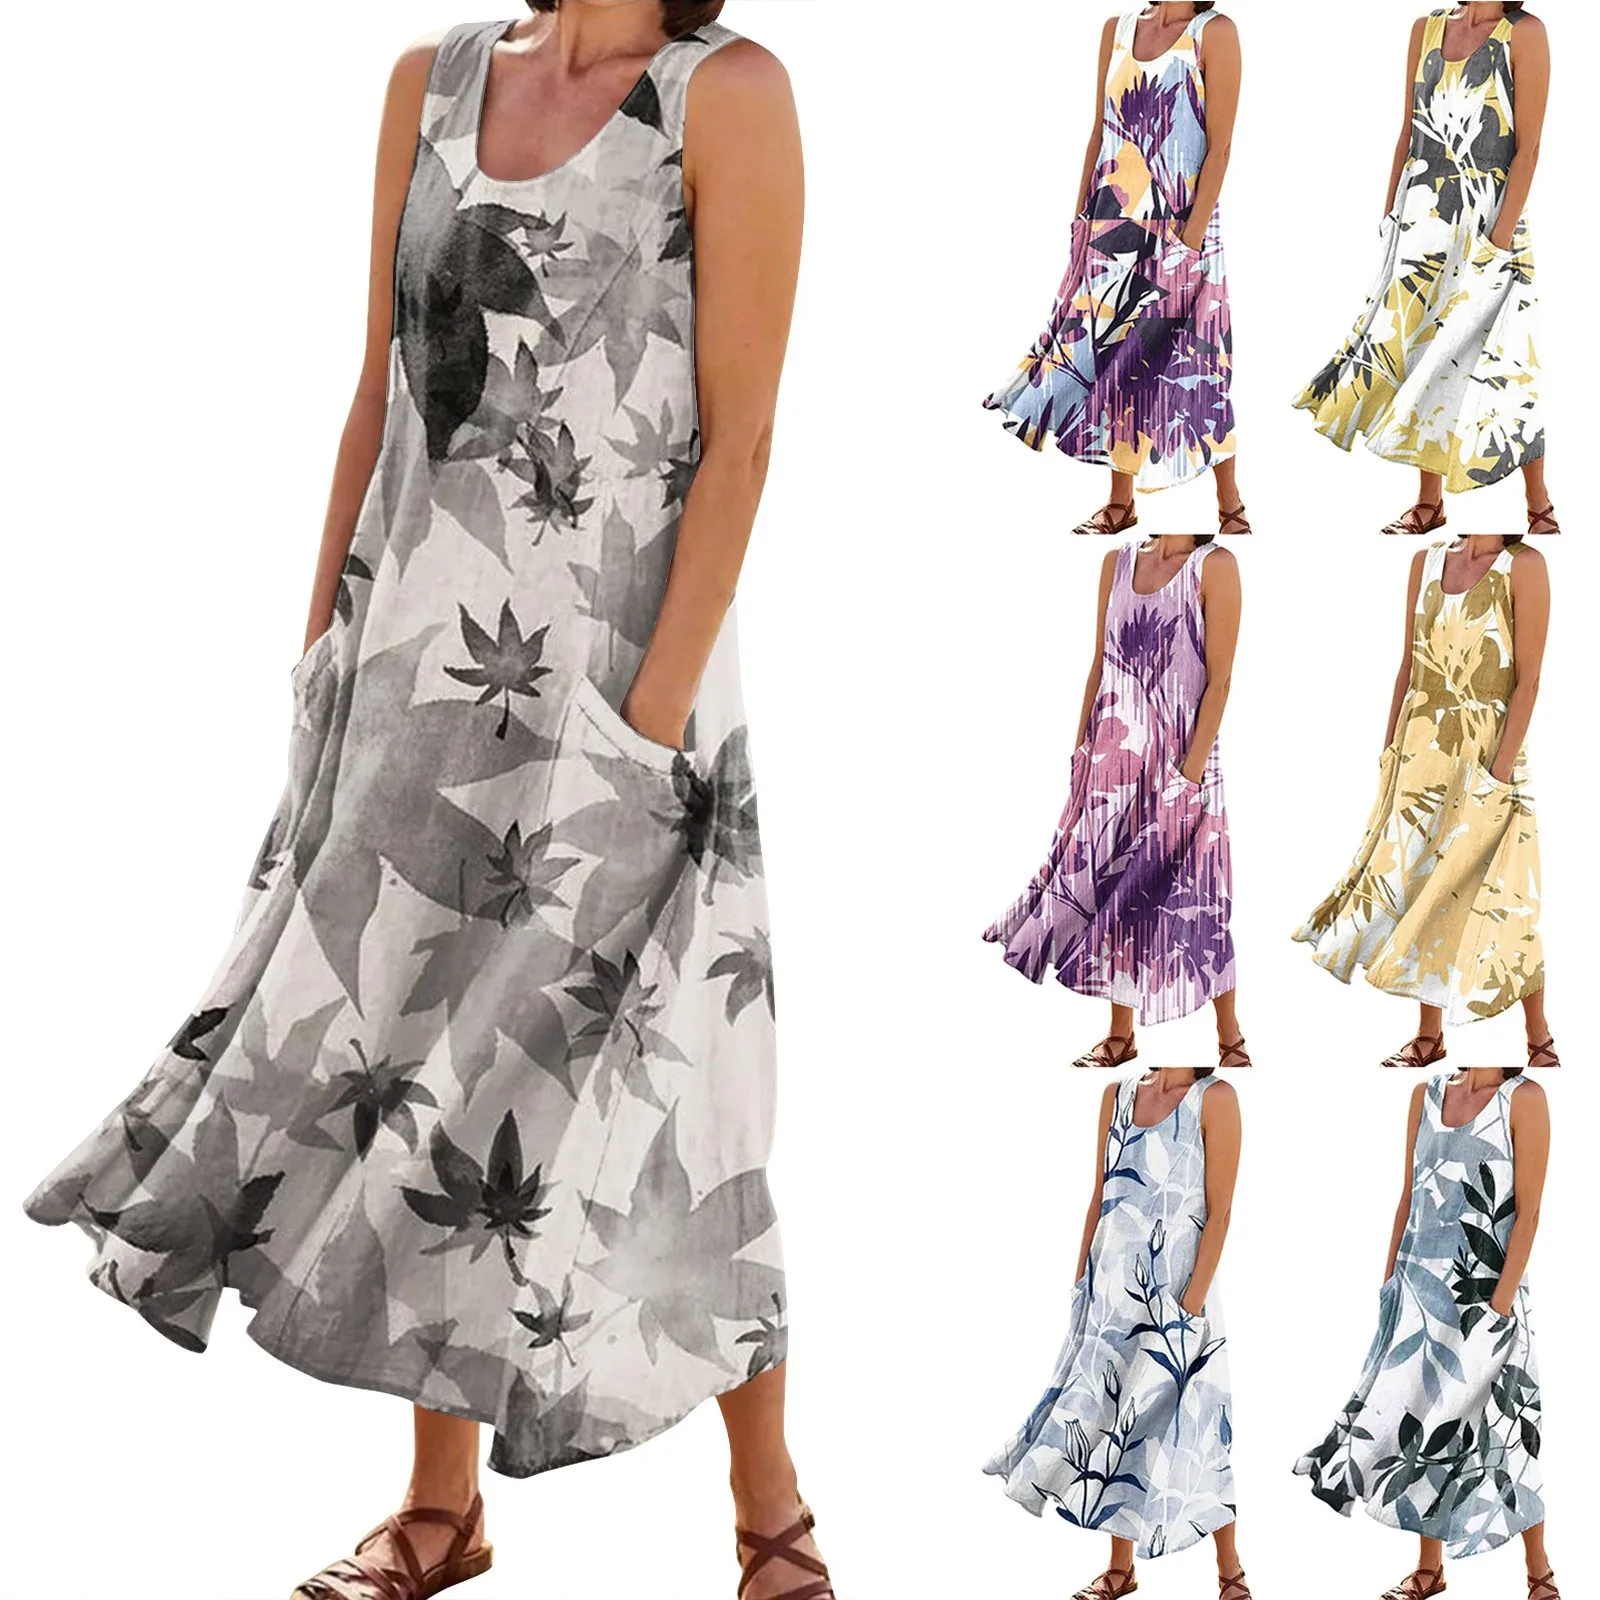 

Women's Summer Casual Fashion Dresses Easter Printed Sleeveless Round Neck Pocket Dress Elegant Slim-Type Skirt فساتين طويلة